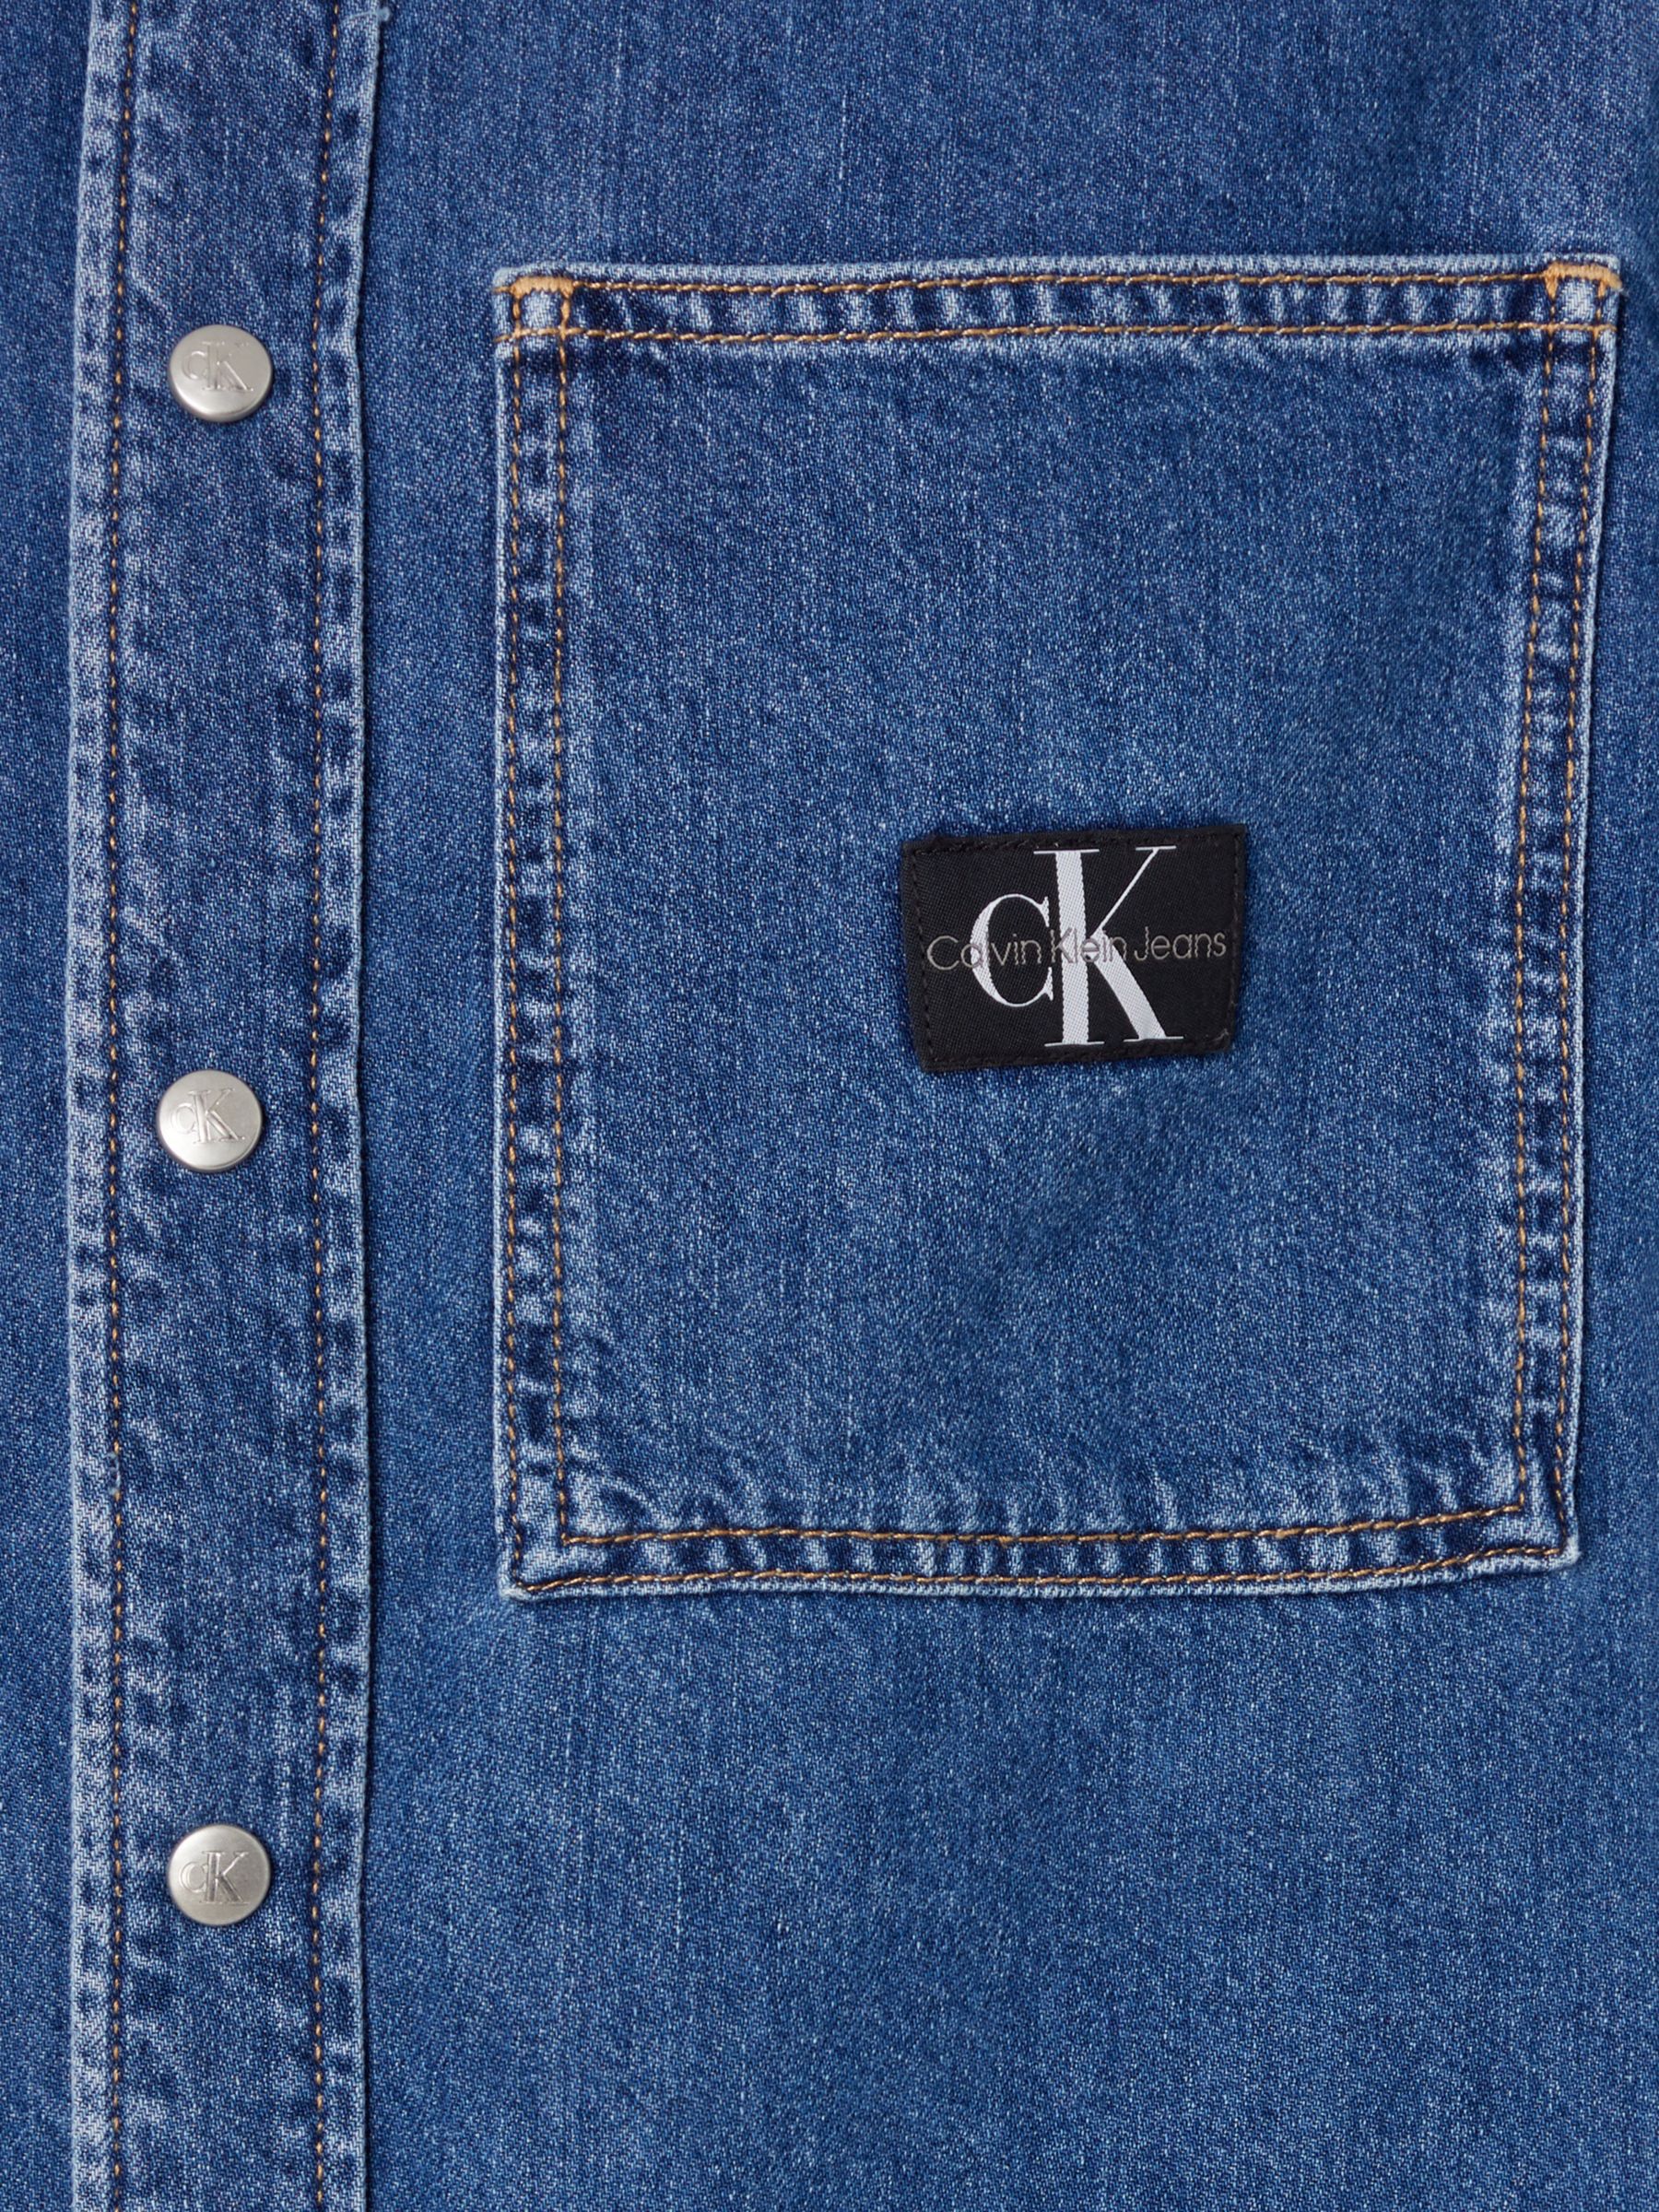 Calvin Klein Jeans Relaxed Denim Shirt, Denim Dark, L